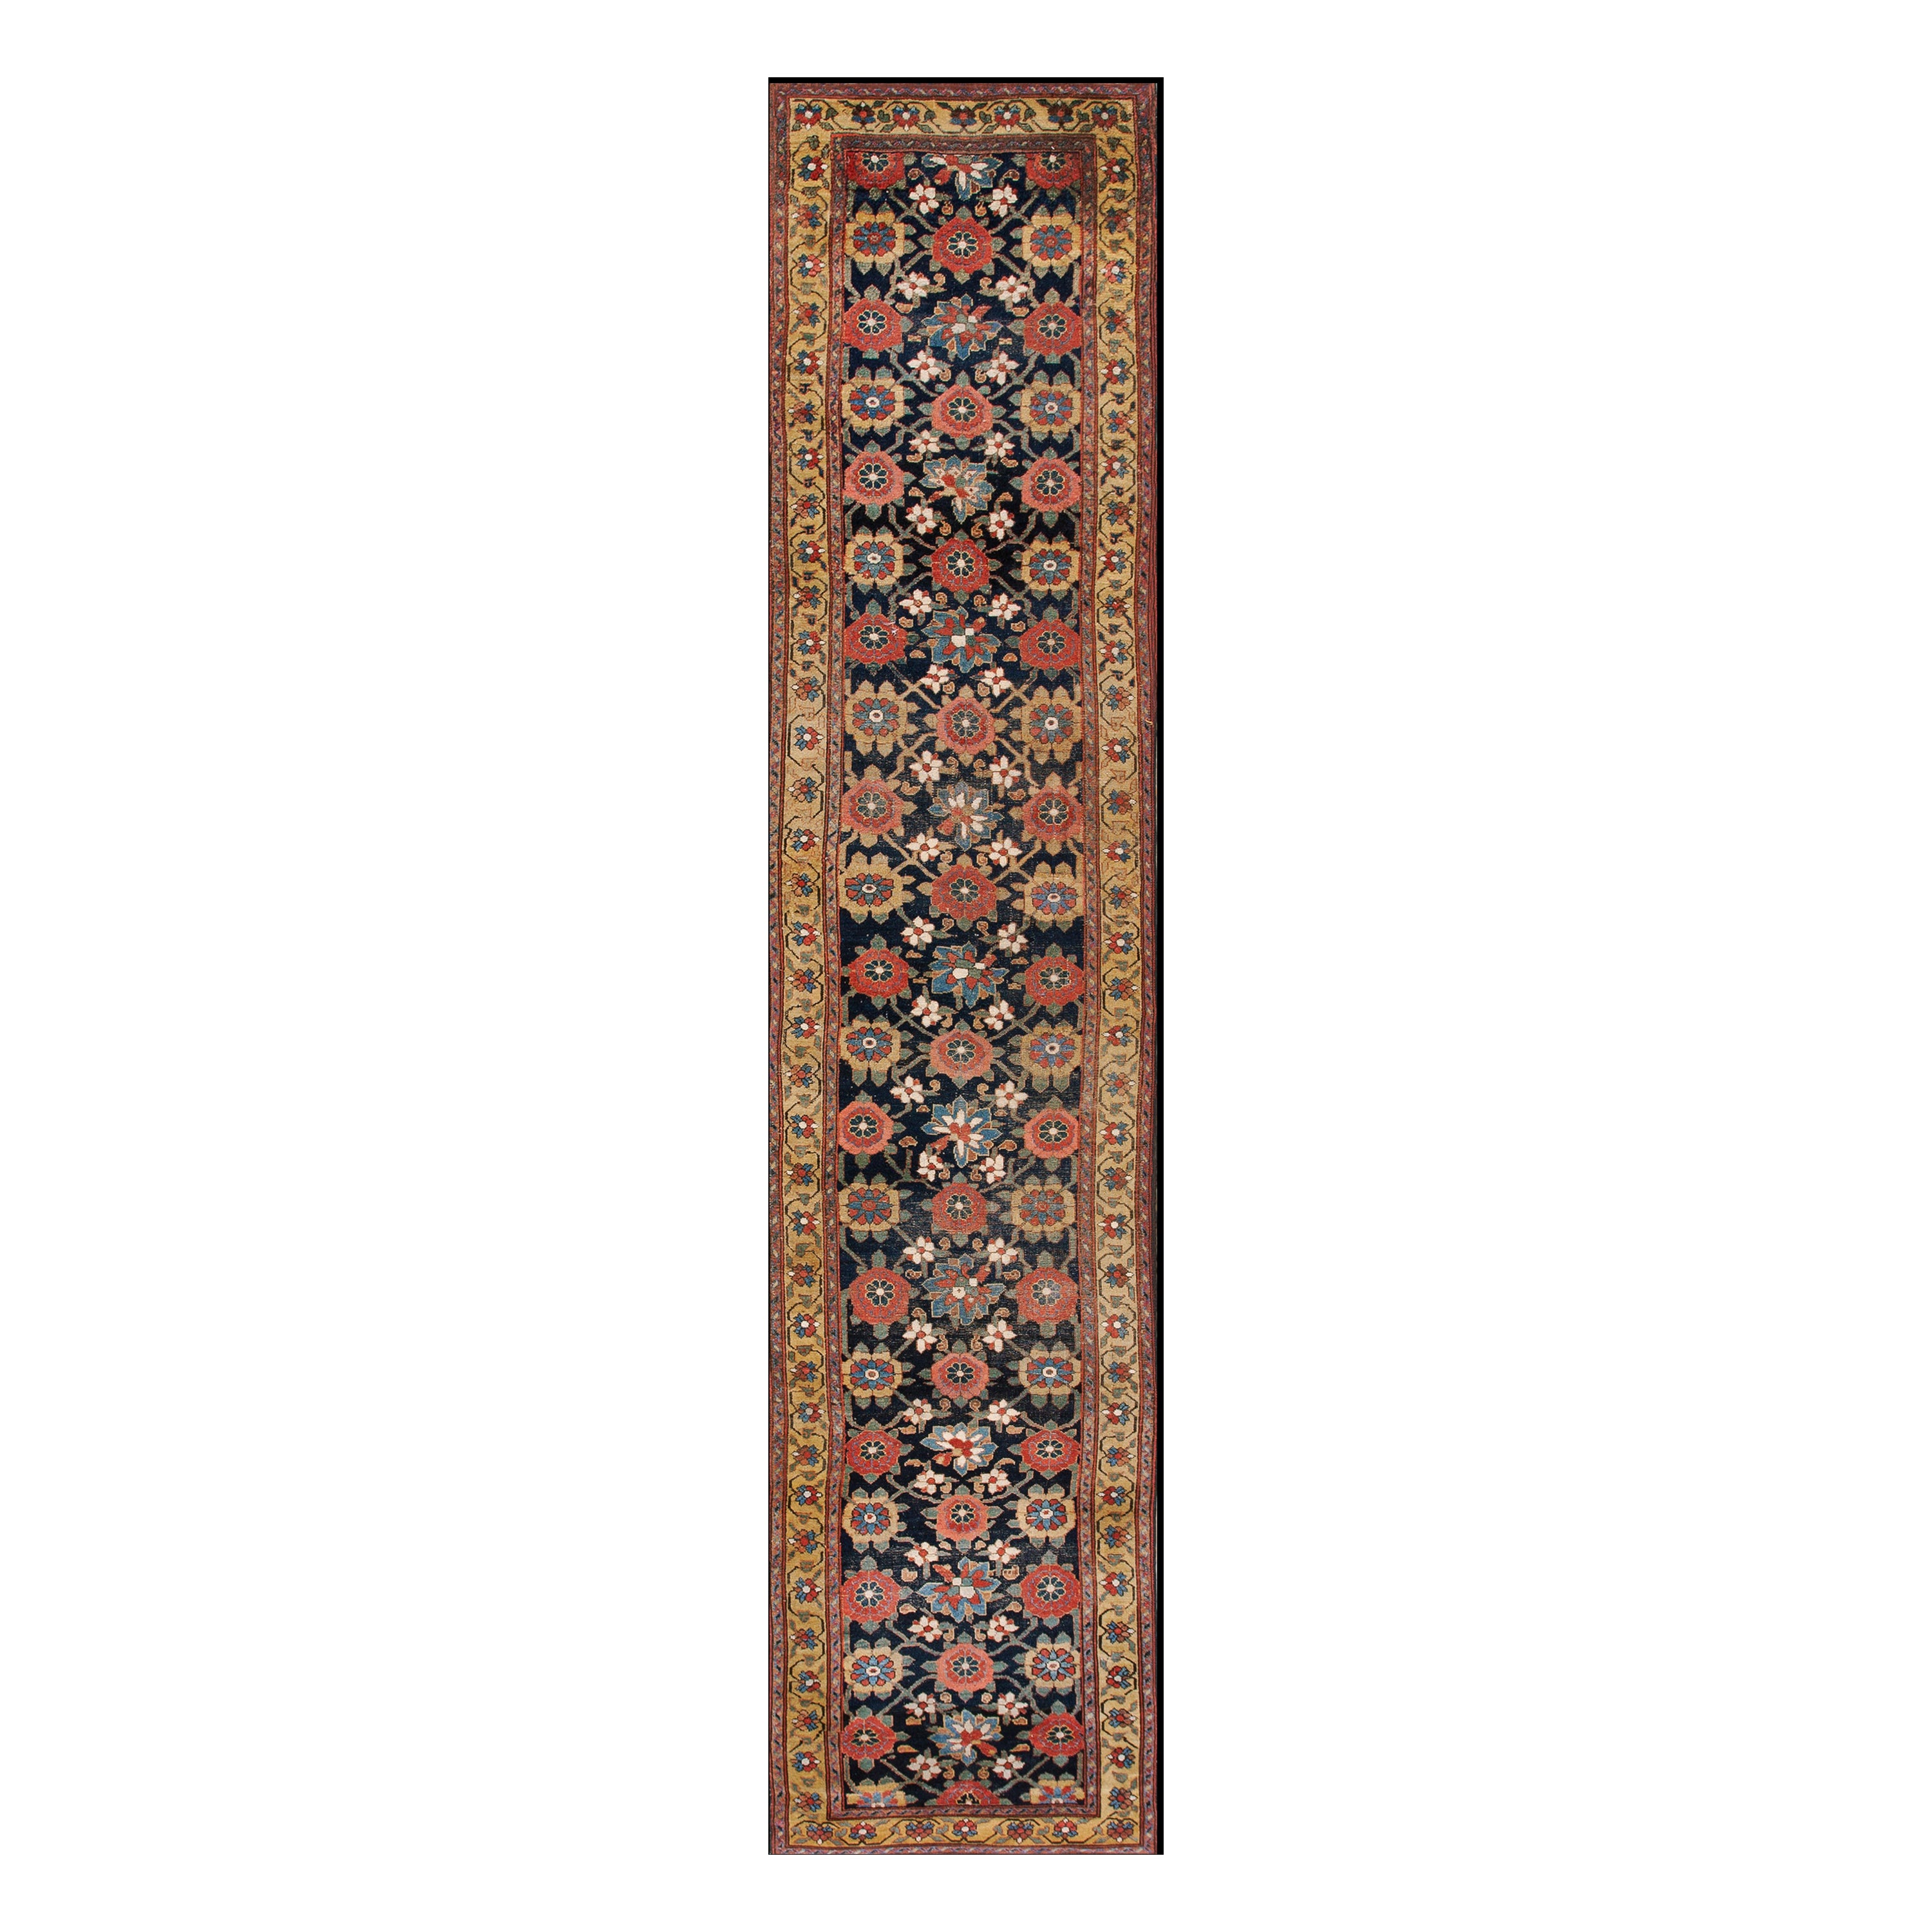 19th Century W. Persian Kurdish Carpet ( 3'4" x 15'9" - 102 x 480 )